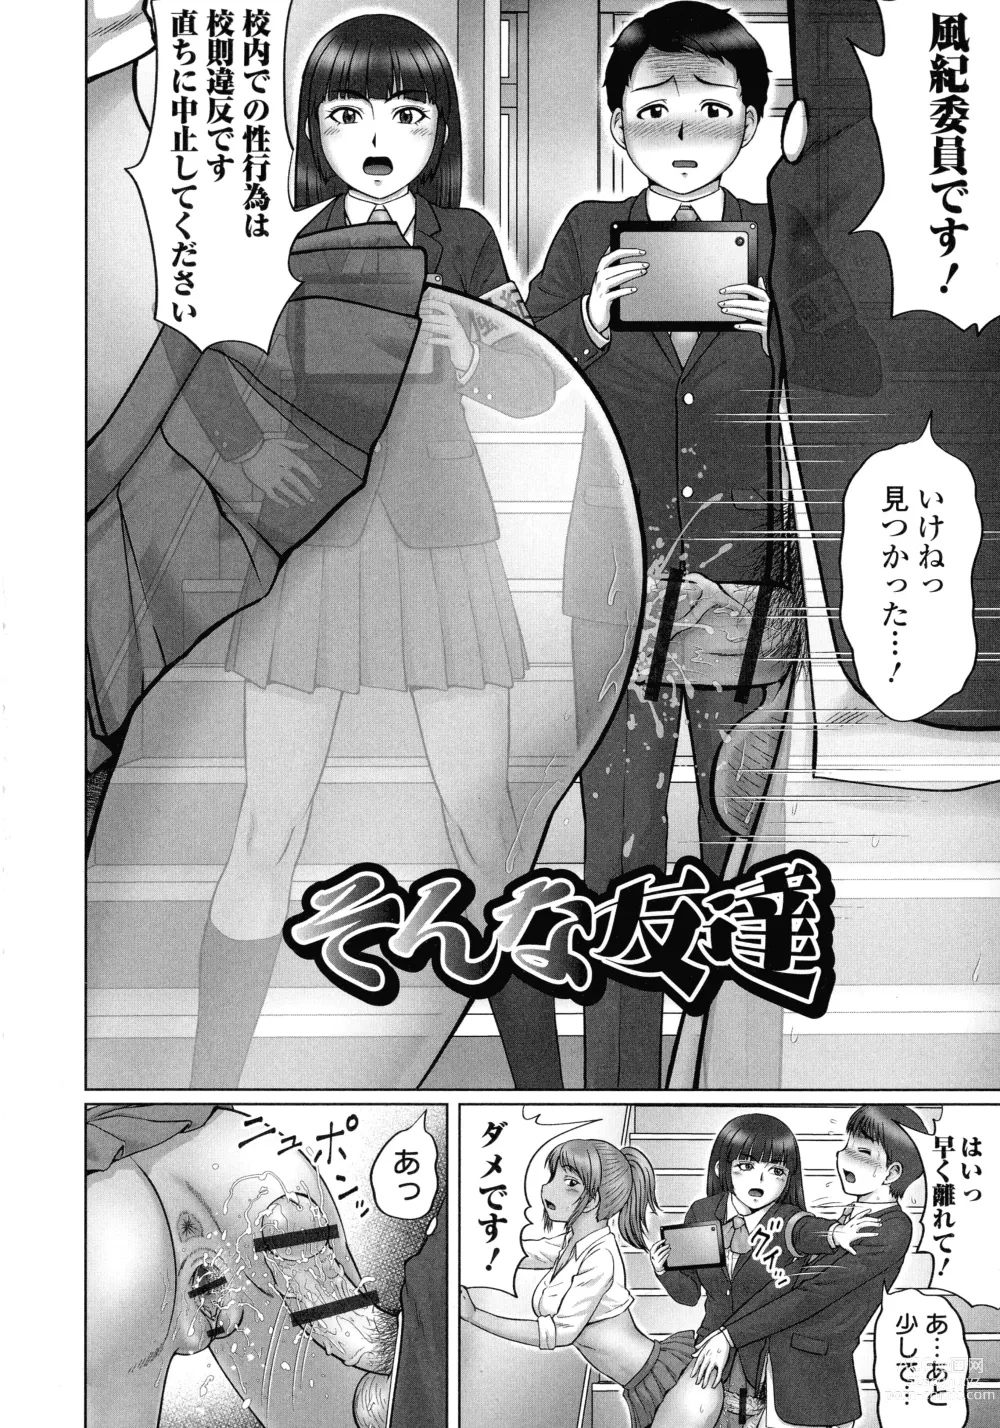 Page 5 of manga Doutei Z Sedai - Doutei Z Generation